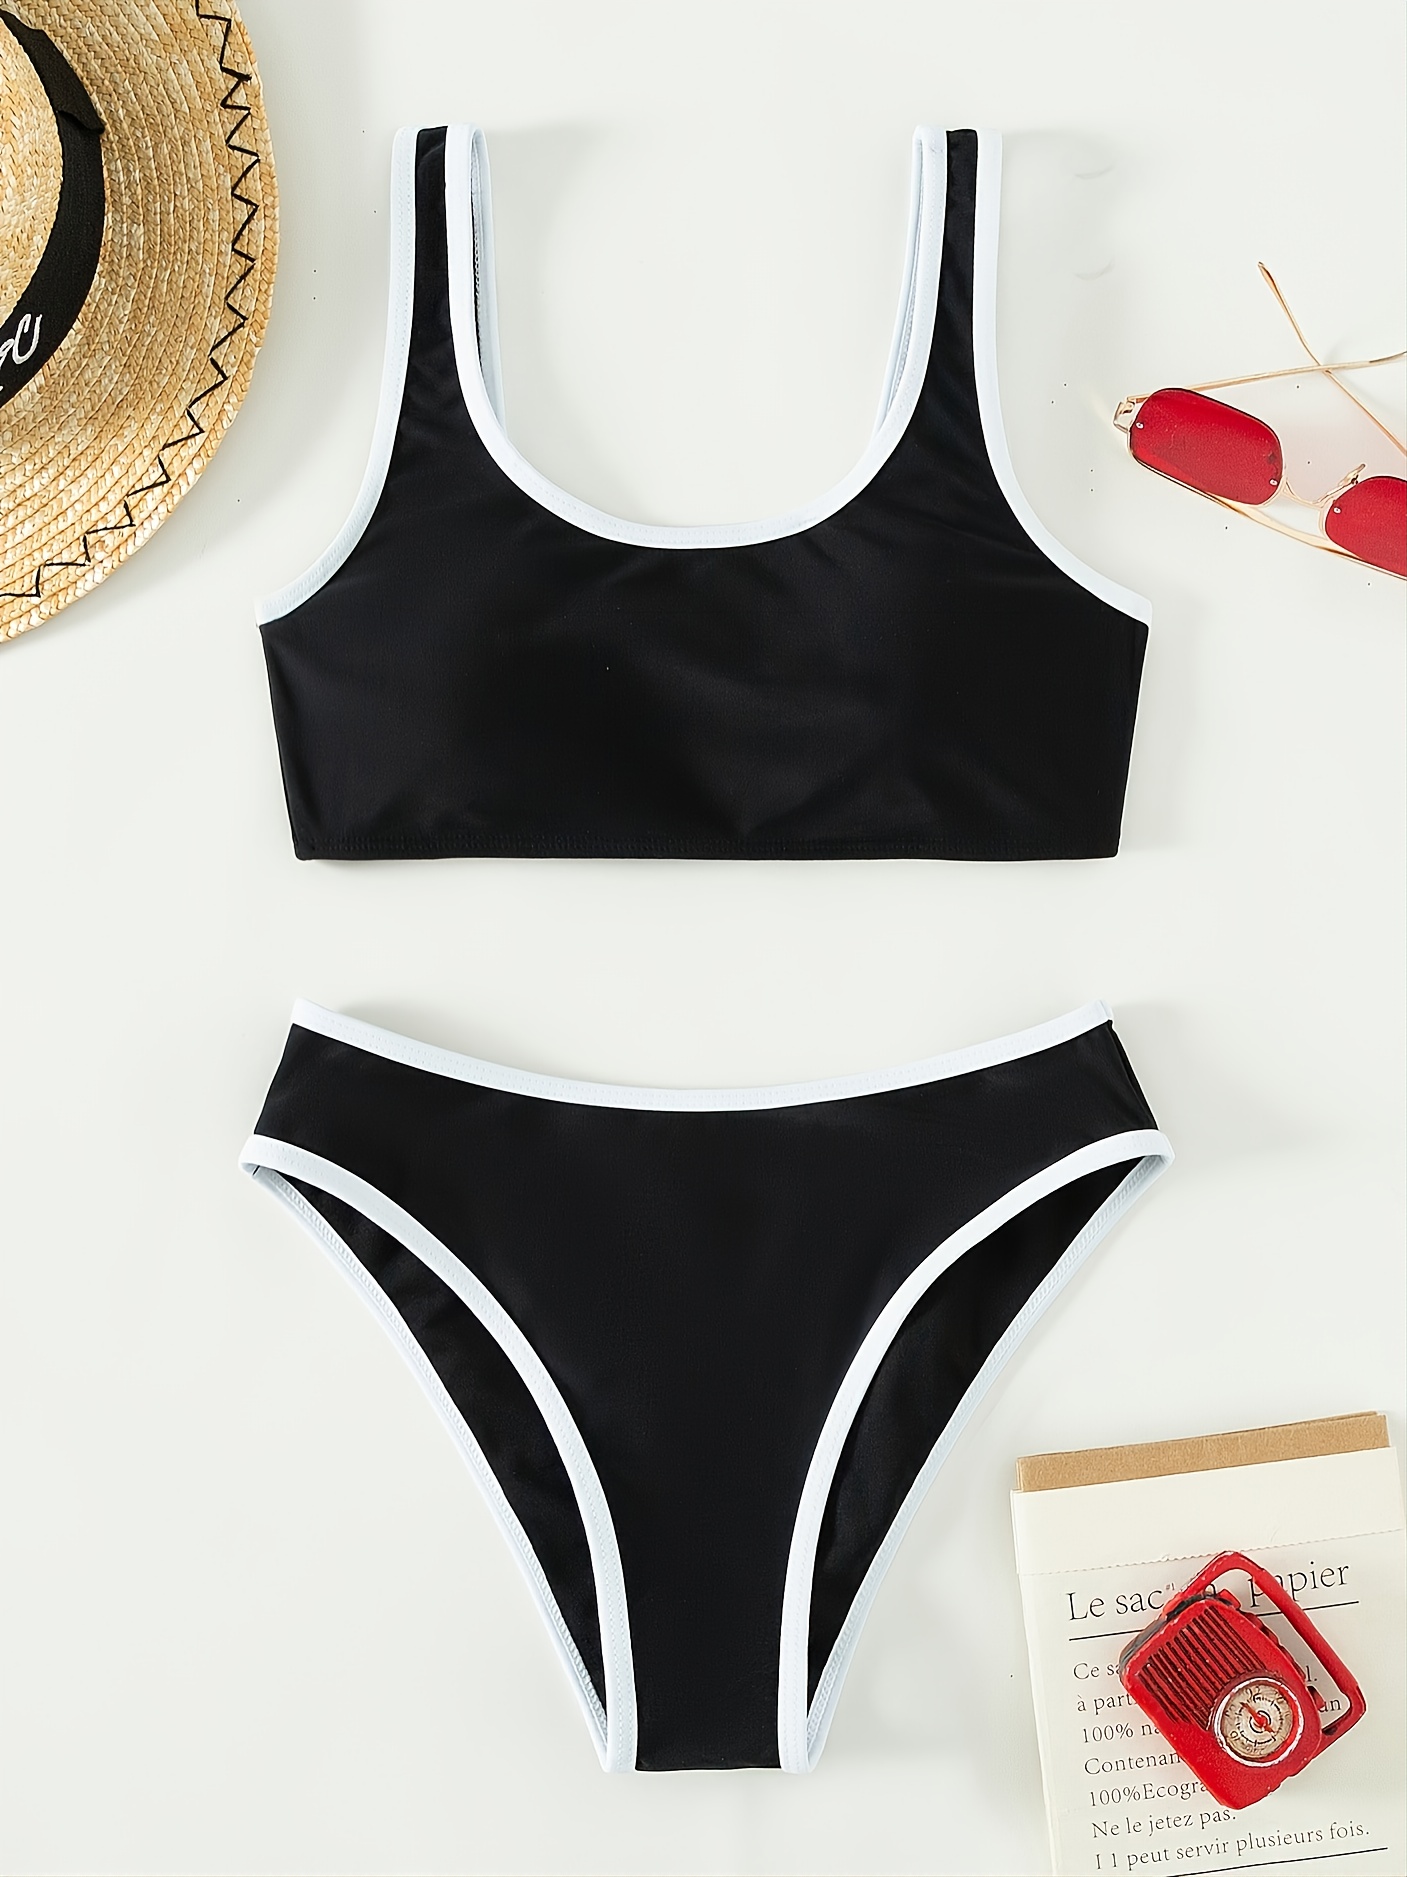 Contrast Trim Black & White Tank Top High Cut Two Piece Bikini Swimsuit ...